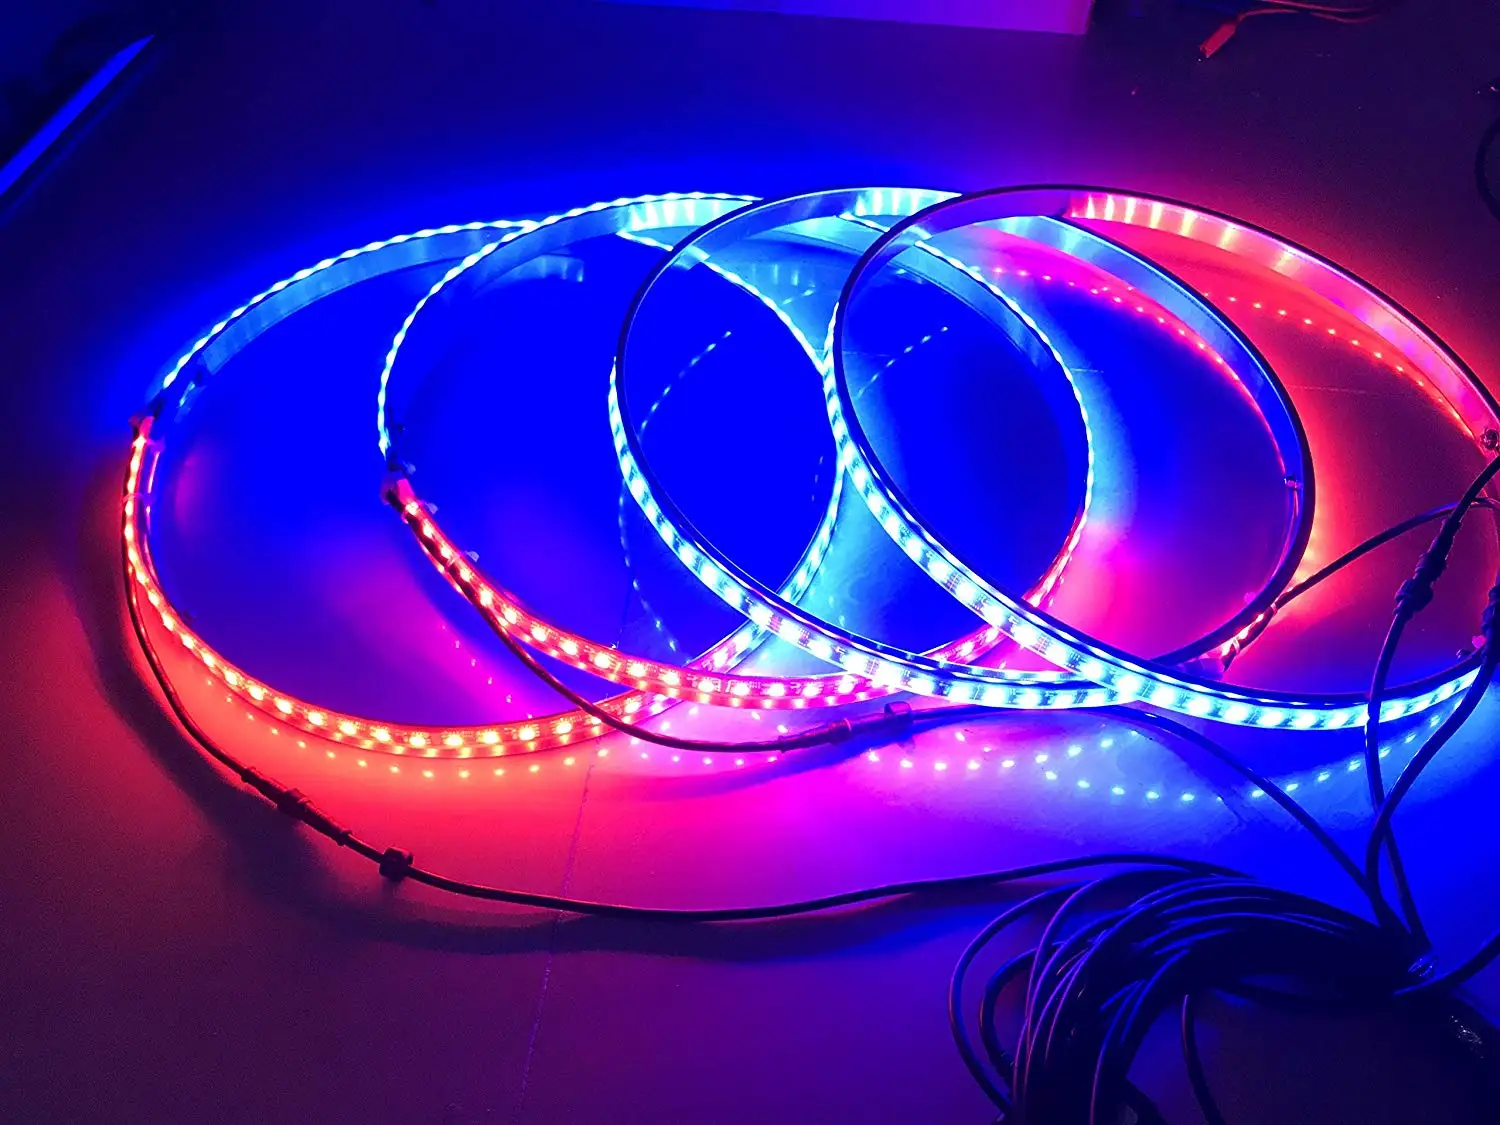 (Set 4) LED Wheel Ring Lights Rim Lights Brightest RGB Multiple Colors Blue-Tooth App Controller